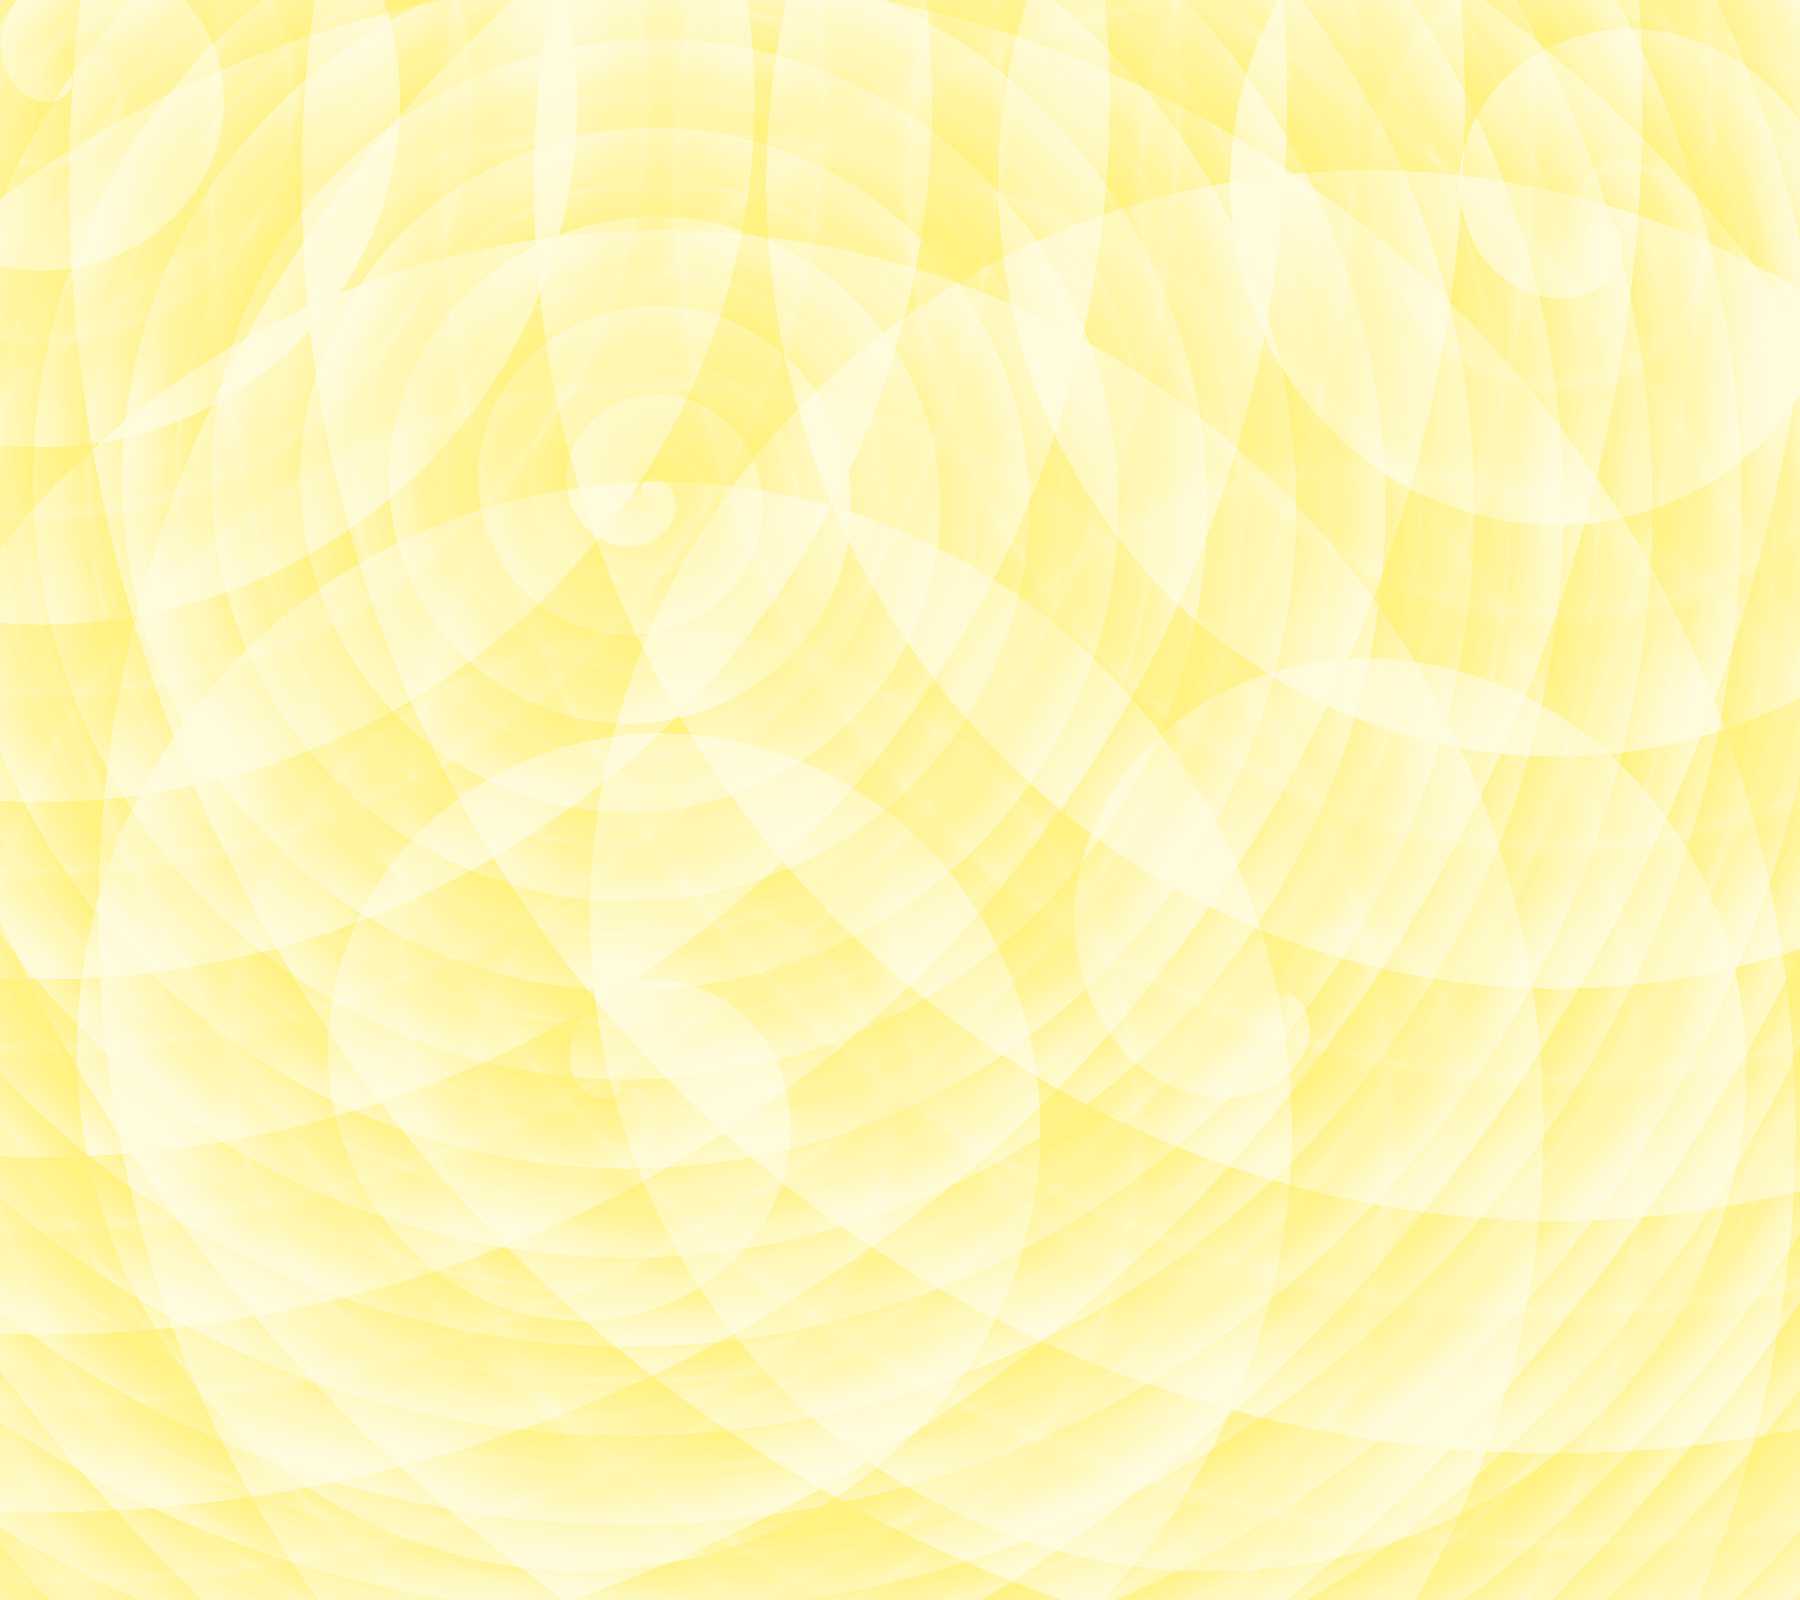 Background Wallpaper Image Yellow Random Spiral Swirls